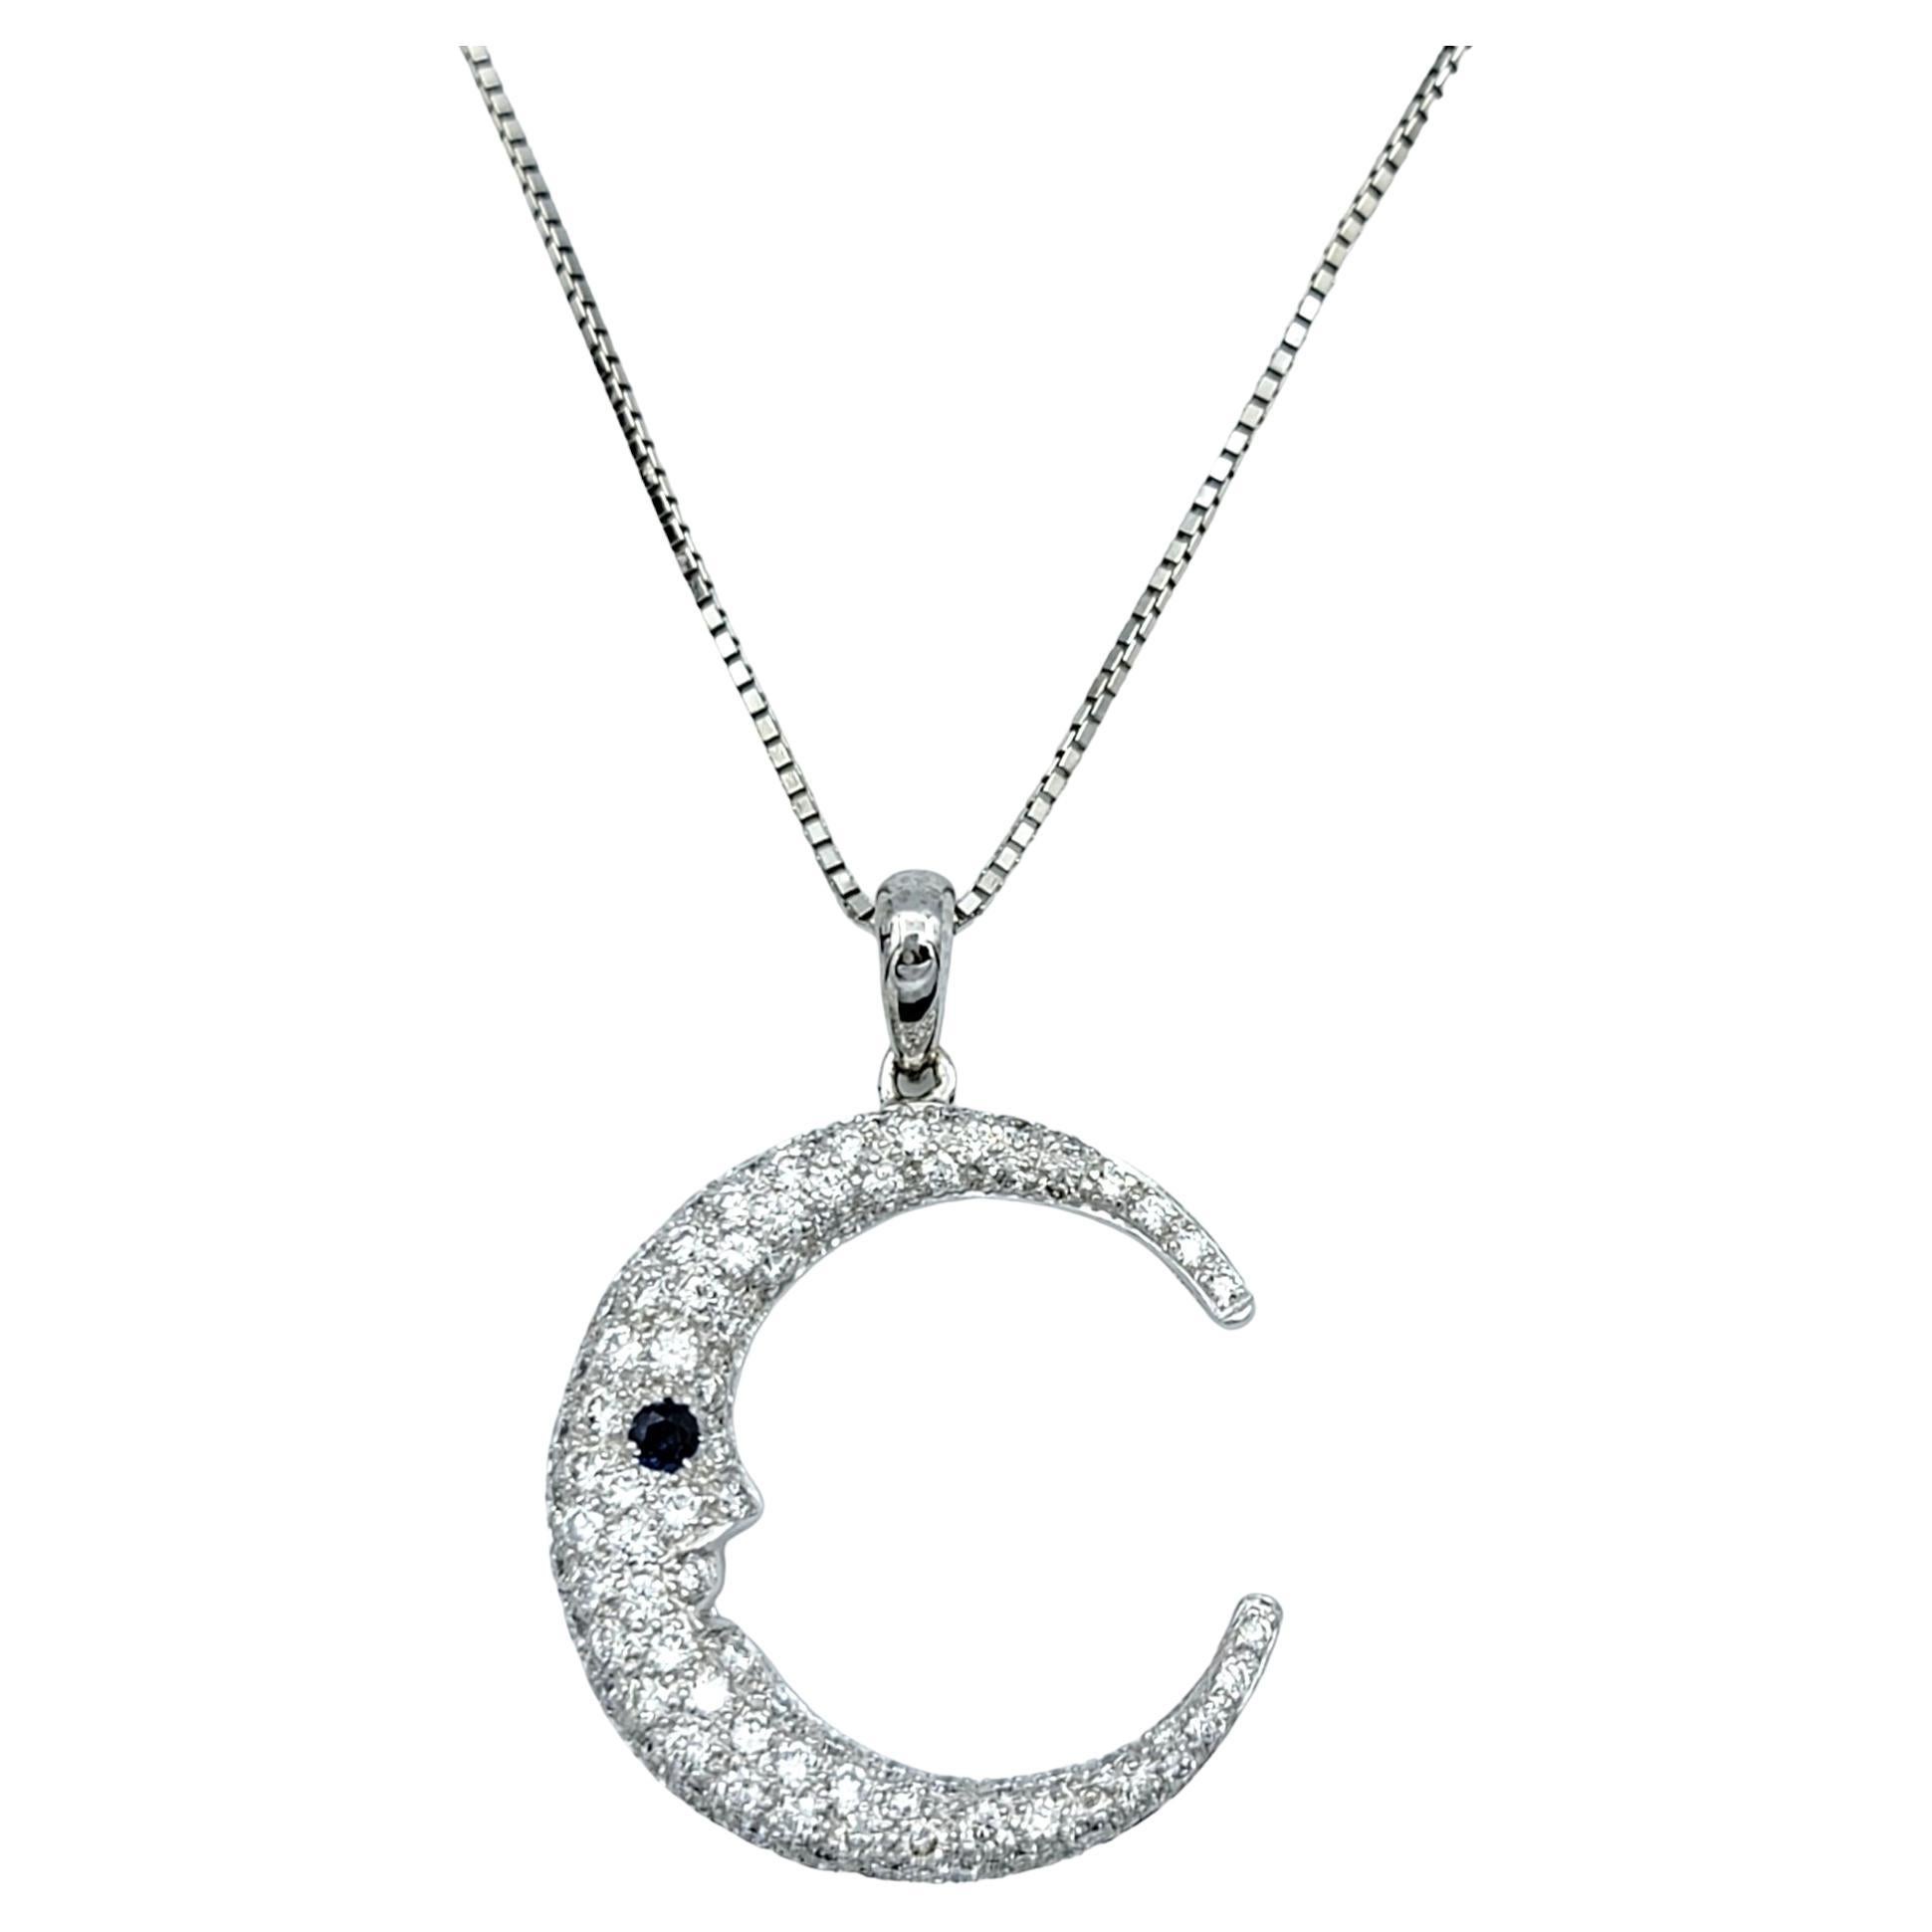 Crescent Moon Pavé Diamond and Sapphire Pendant Necklace in 14 Karat White Gold